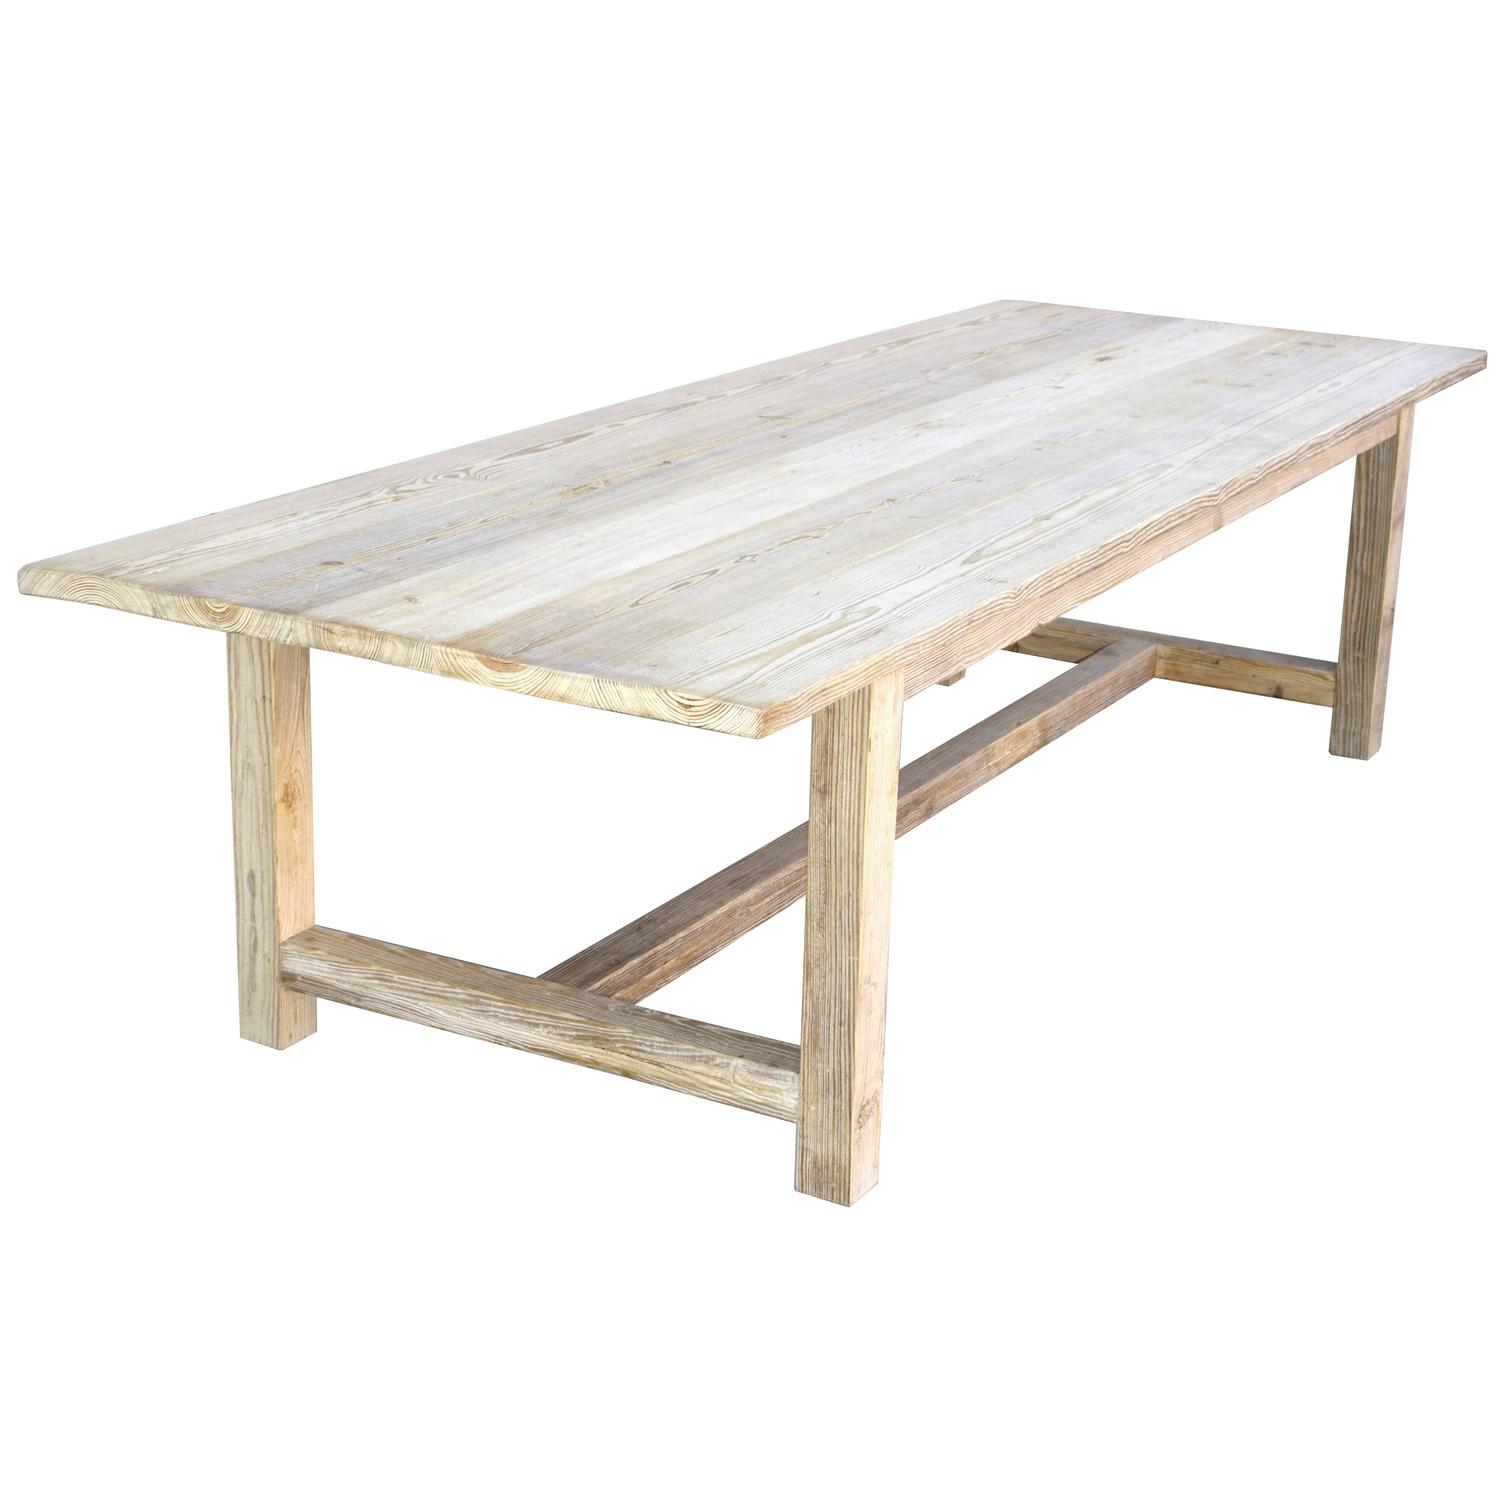 Pine farm table, 2015